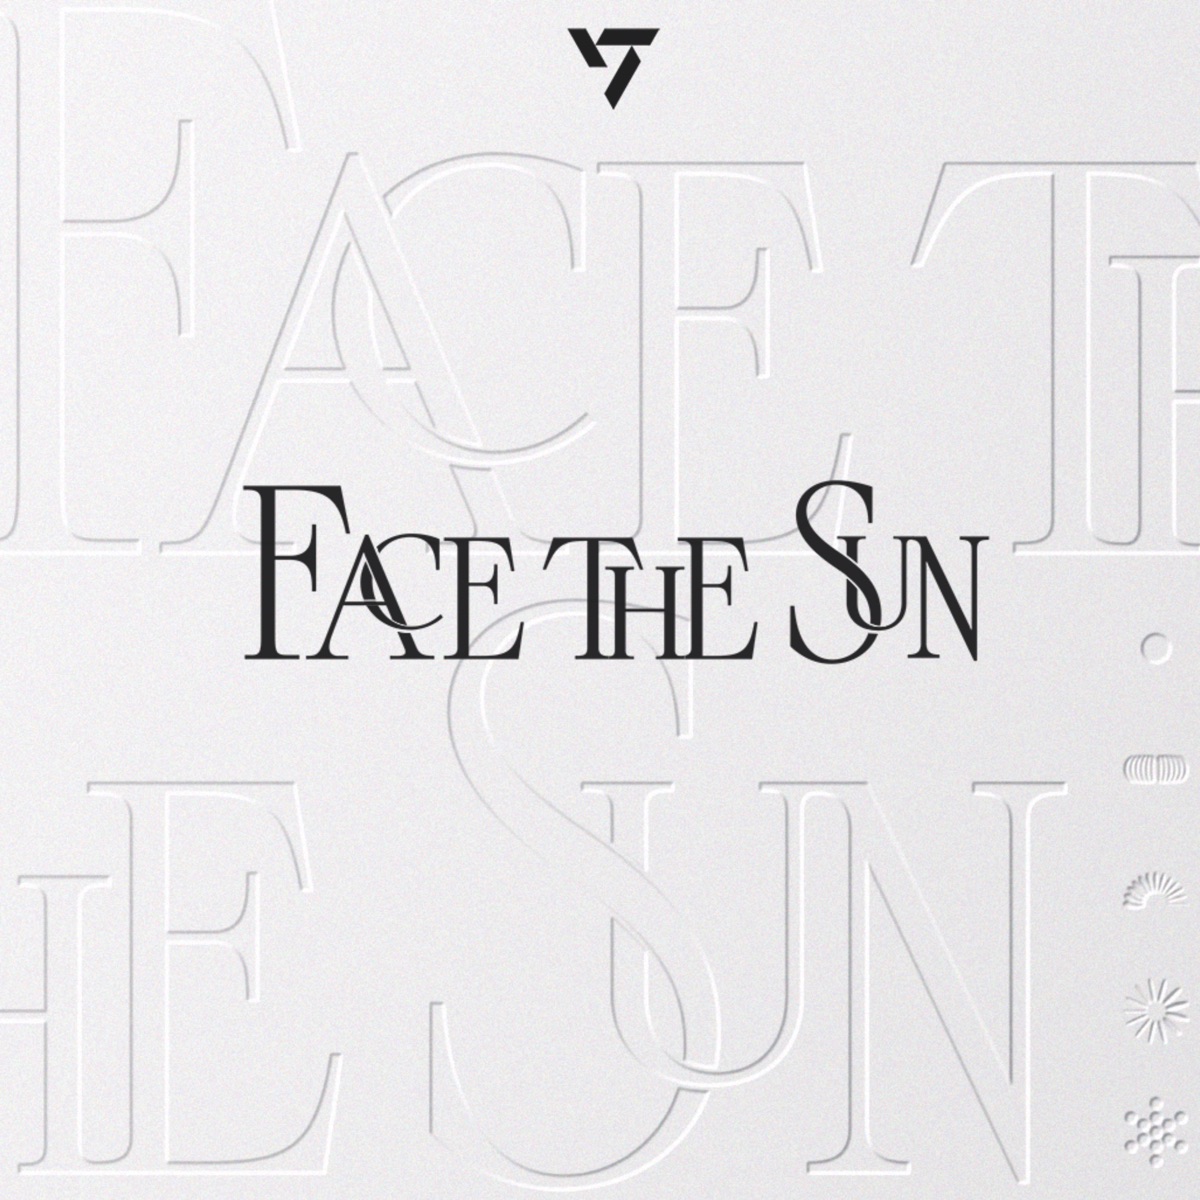 Cover art for『SEVENTEEN - Ash』from the release『SEVENTEEN 4th Album 'Face the Sun'』